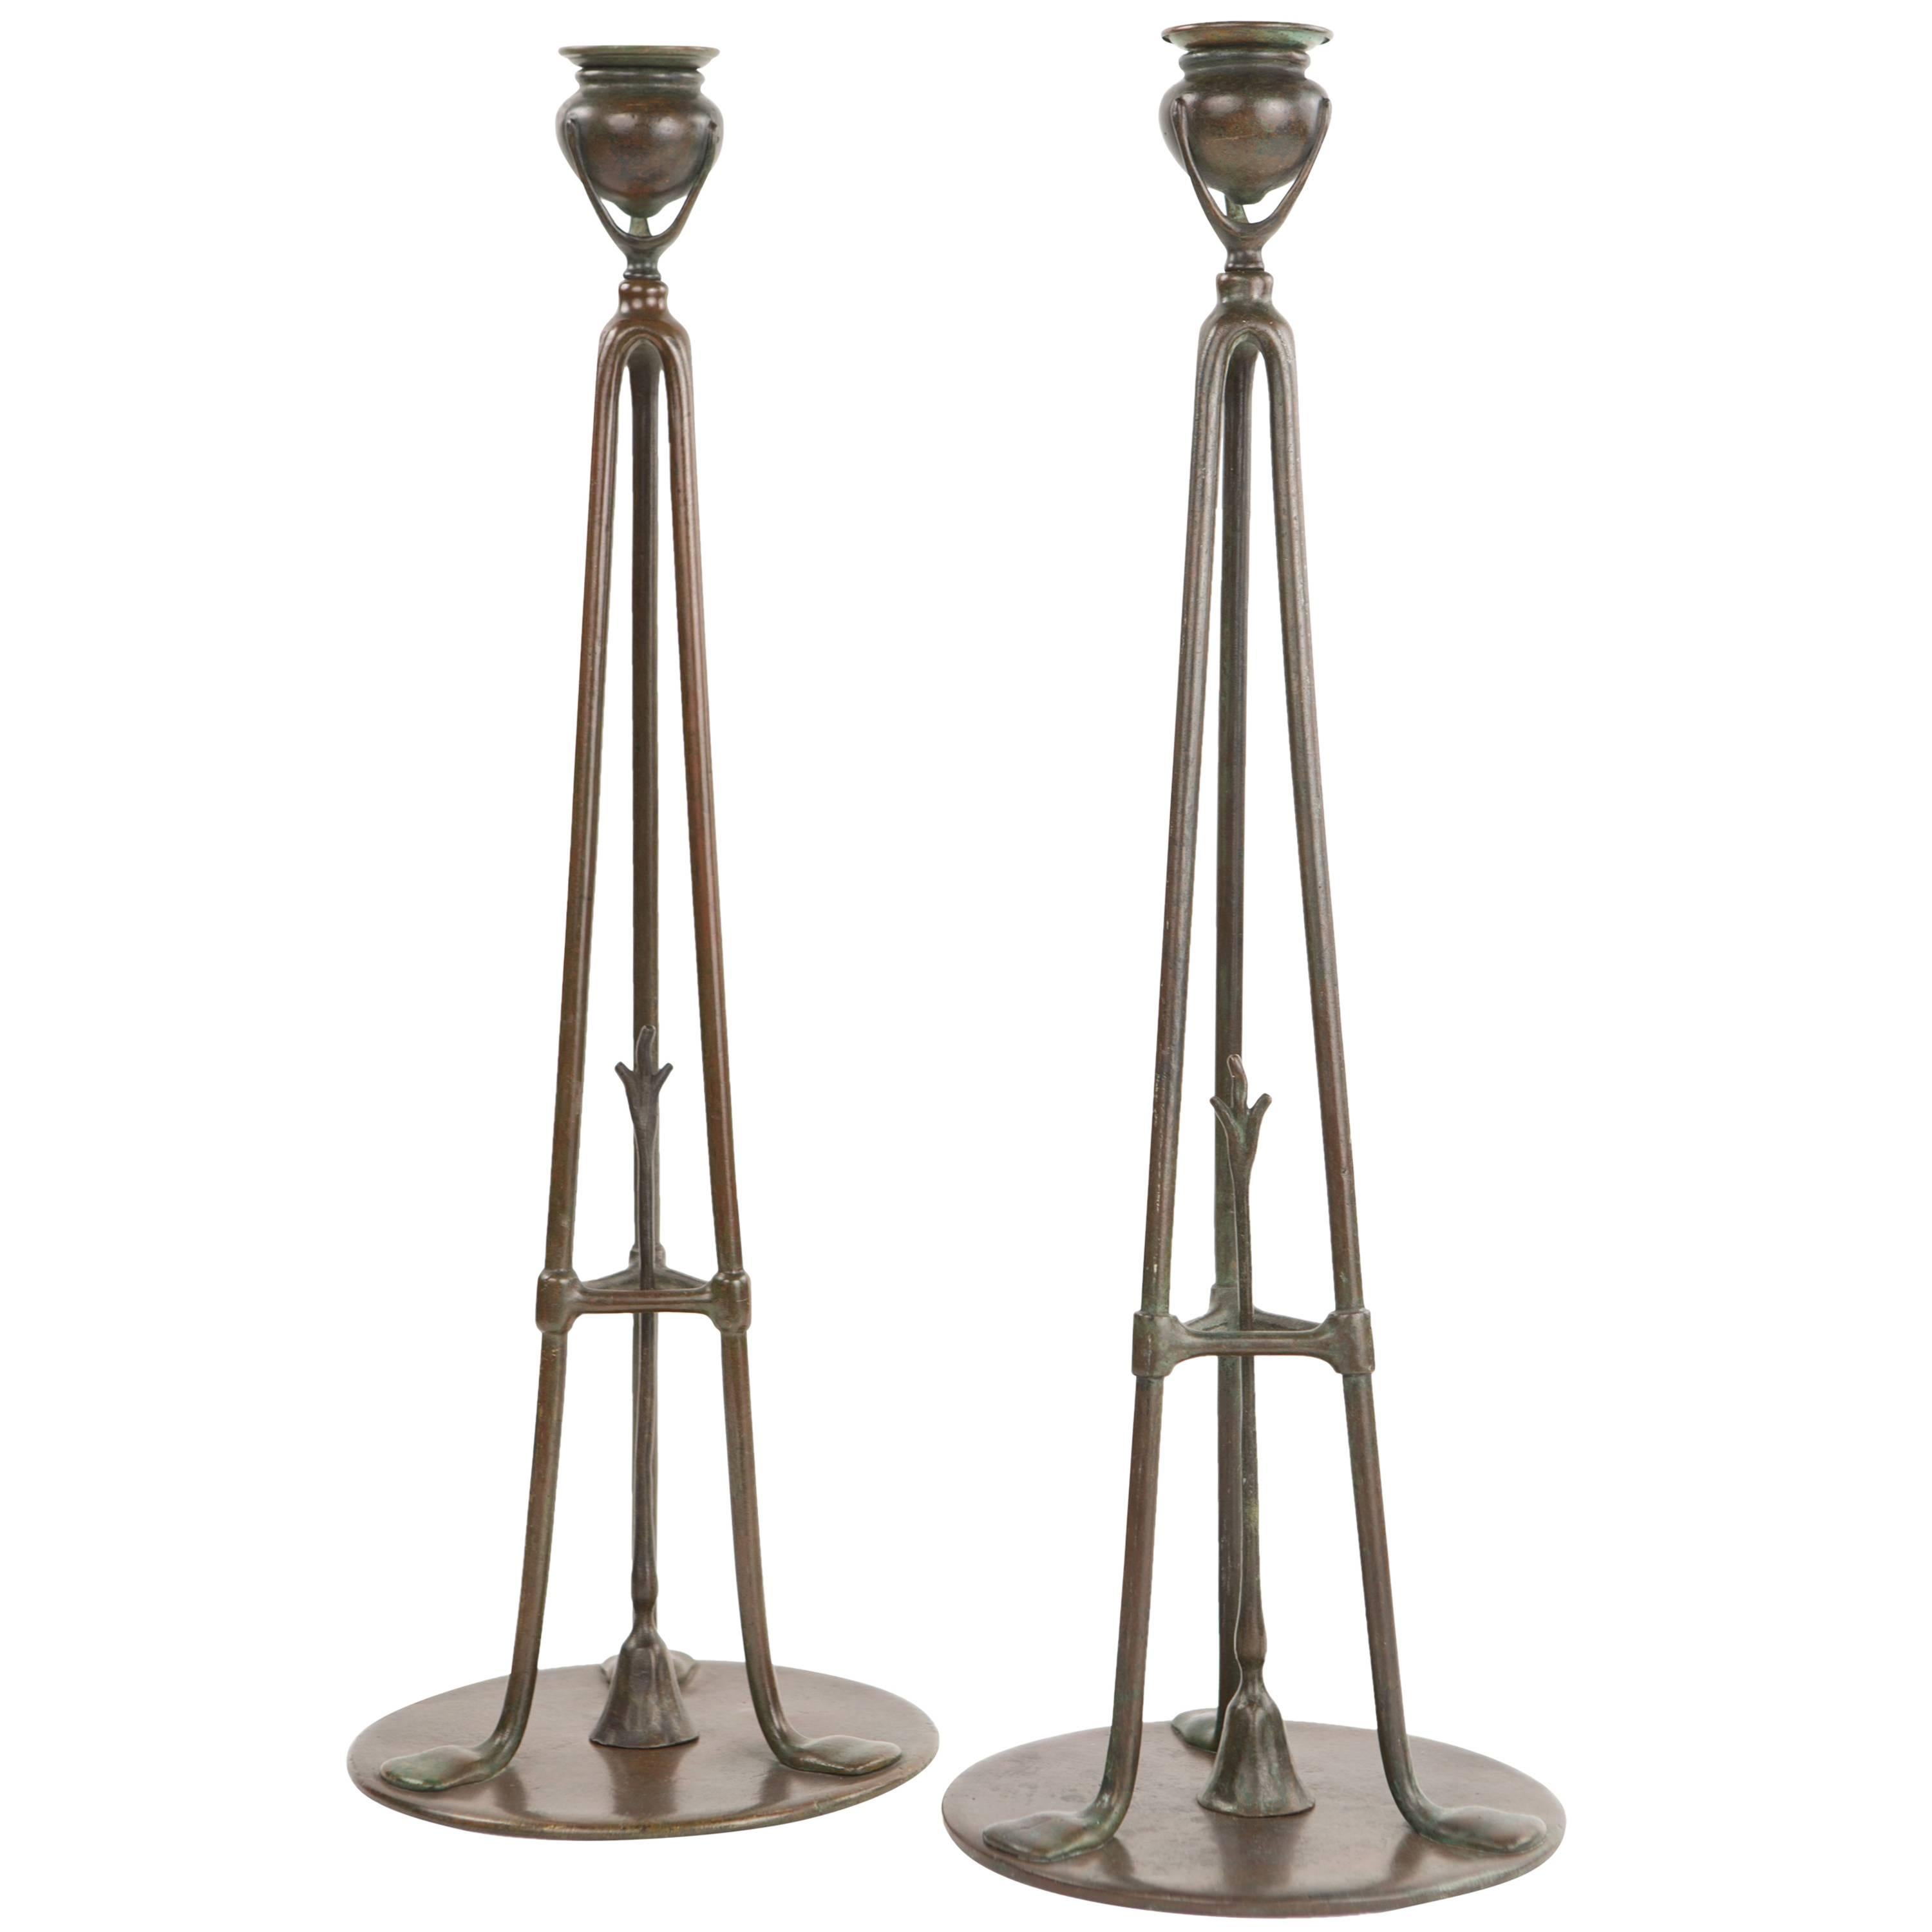 Pair of Art Nouveau Tiffany Studios Tripod Candlesticks